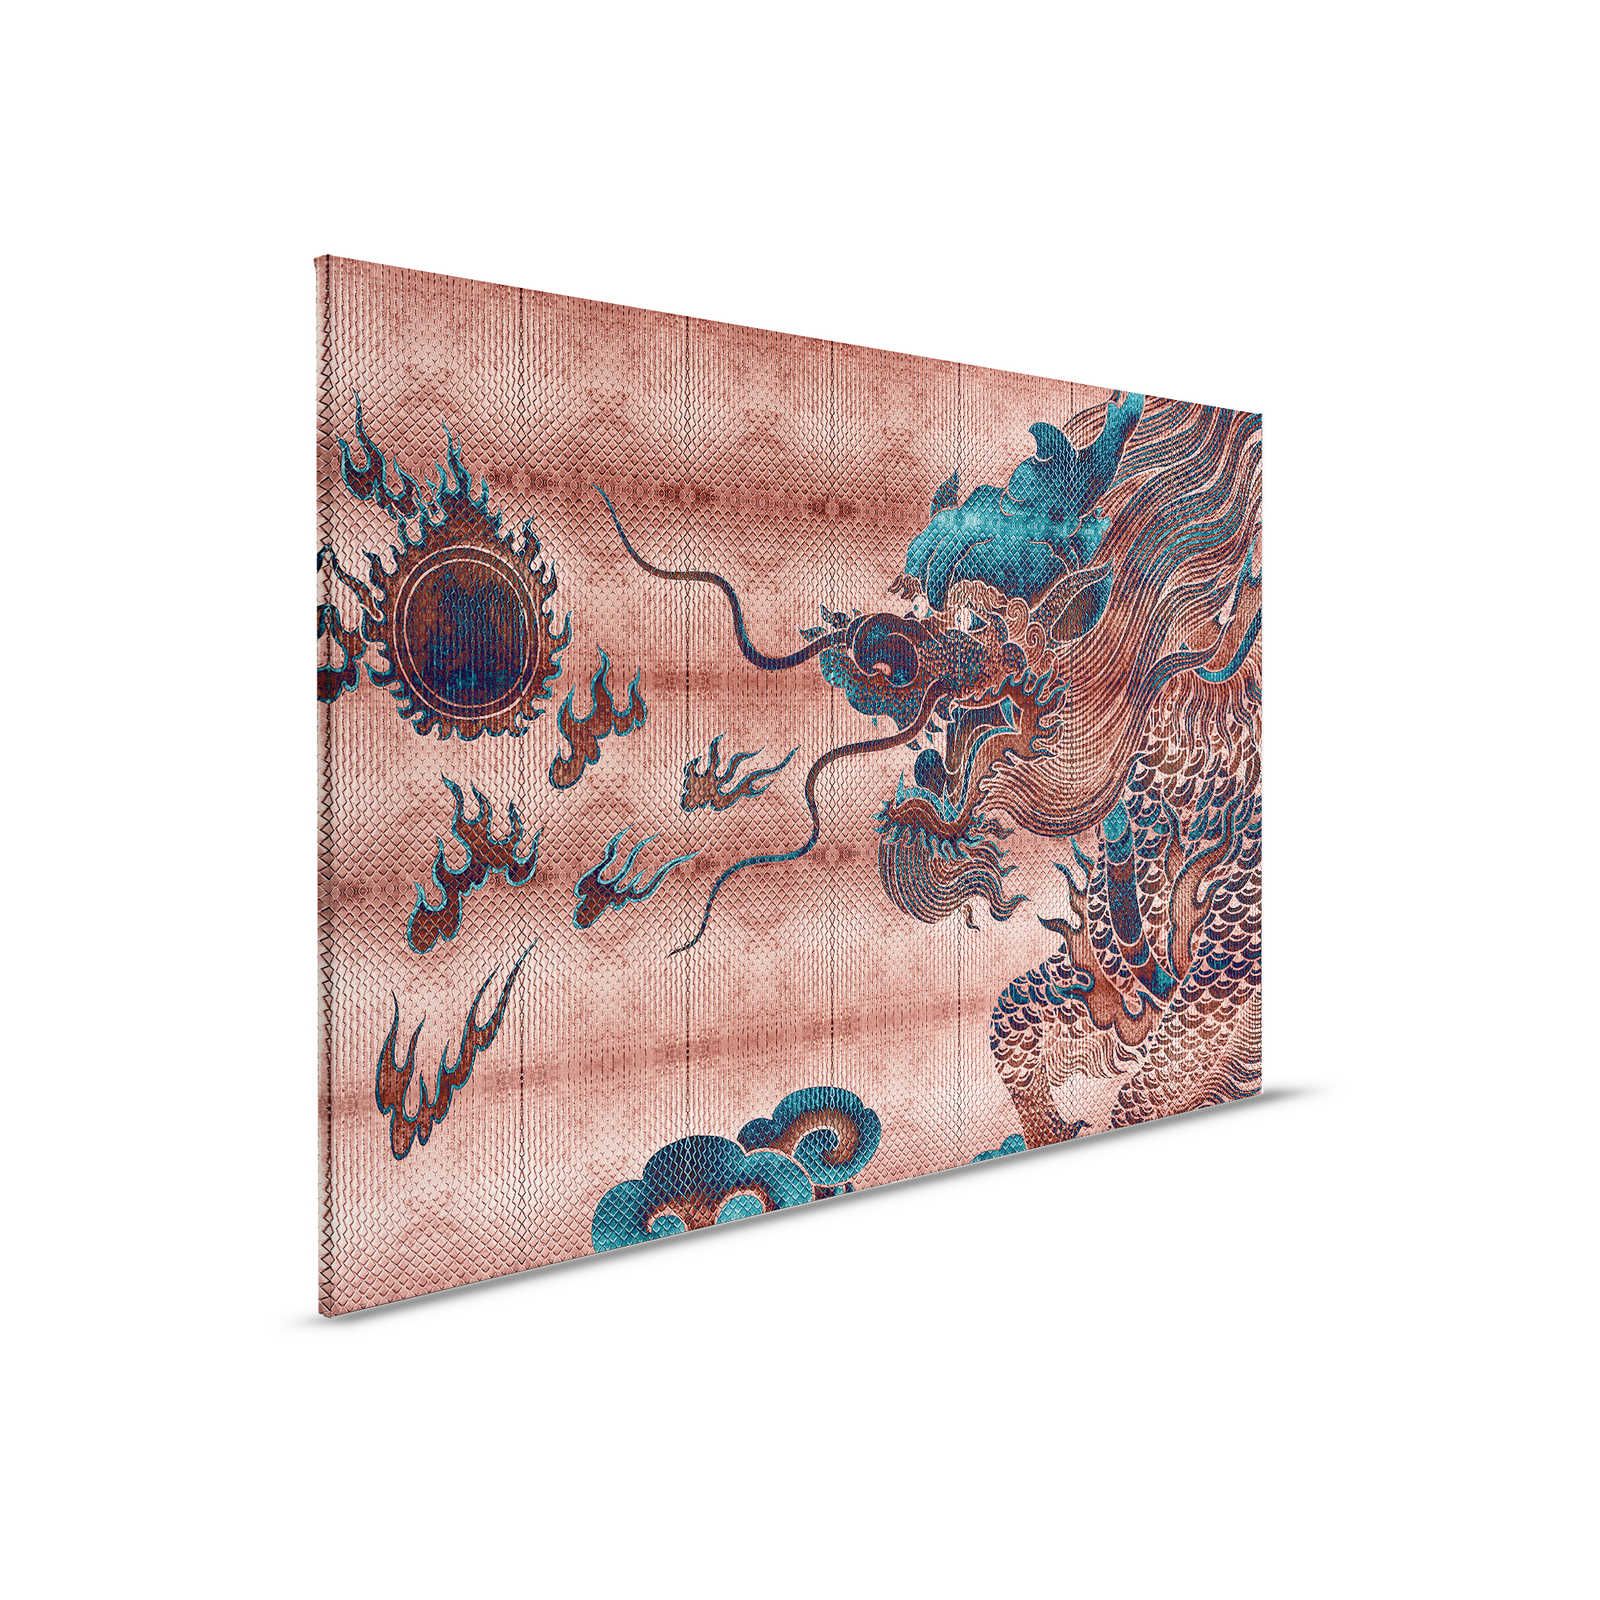 Shenzen 1 - Canvas painting Dragon Asian Syle with metallic colours - 0,90 m x 0,60 m
